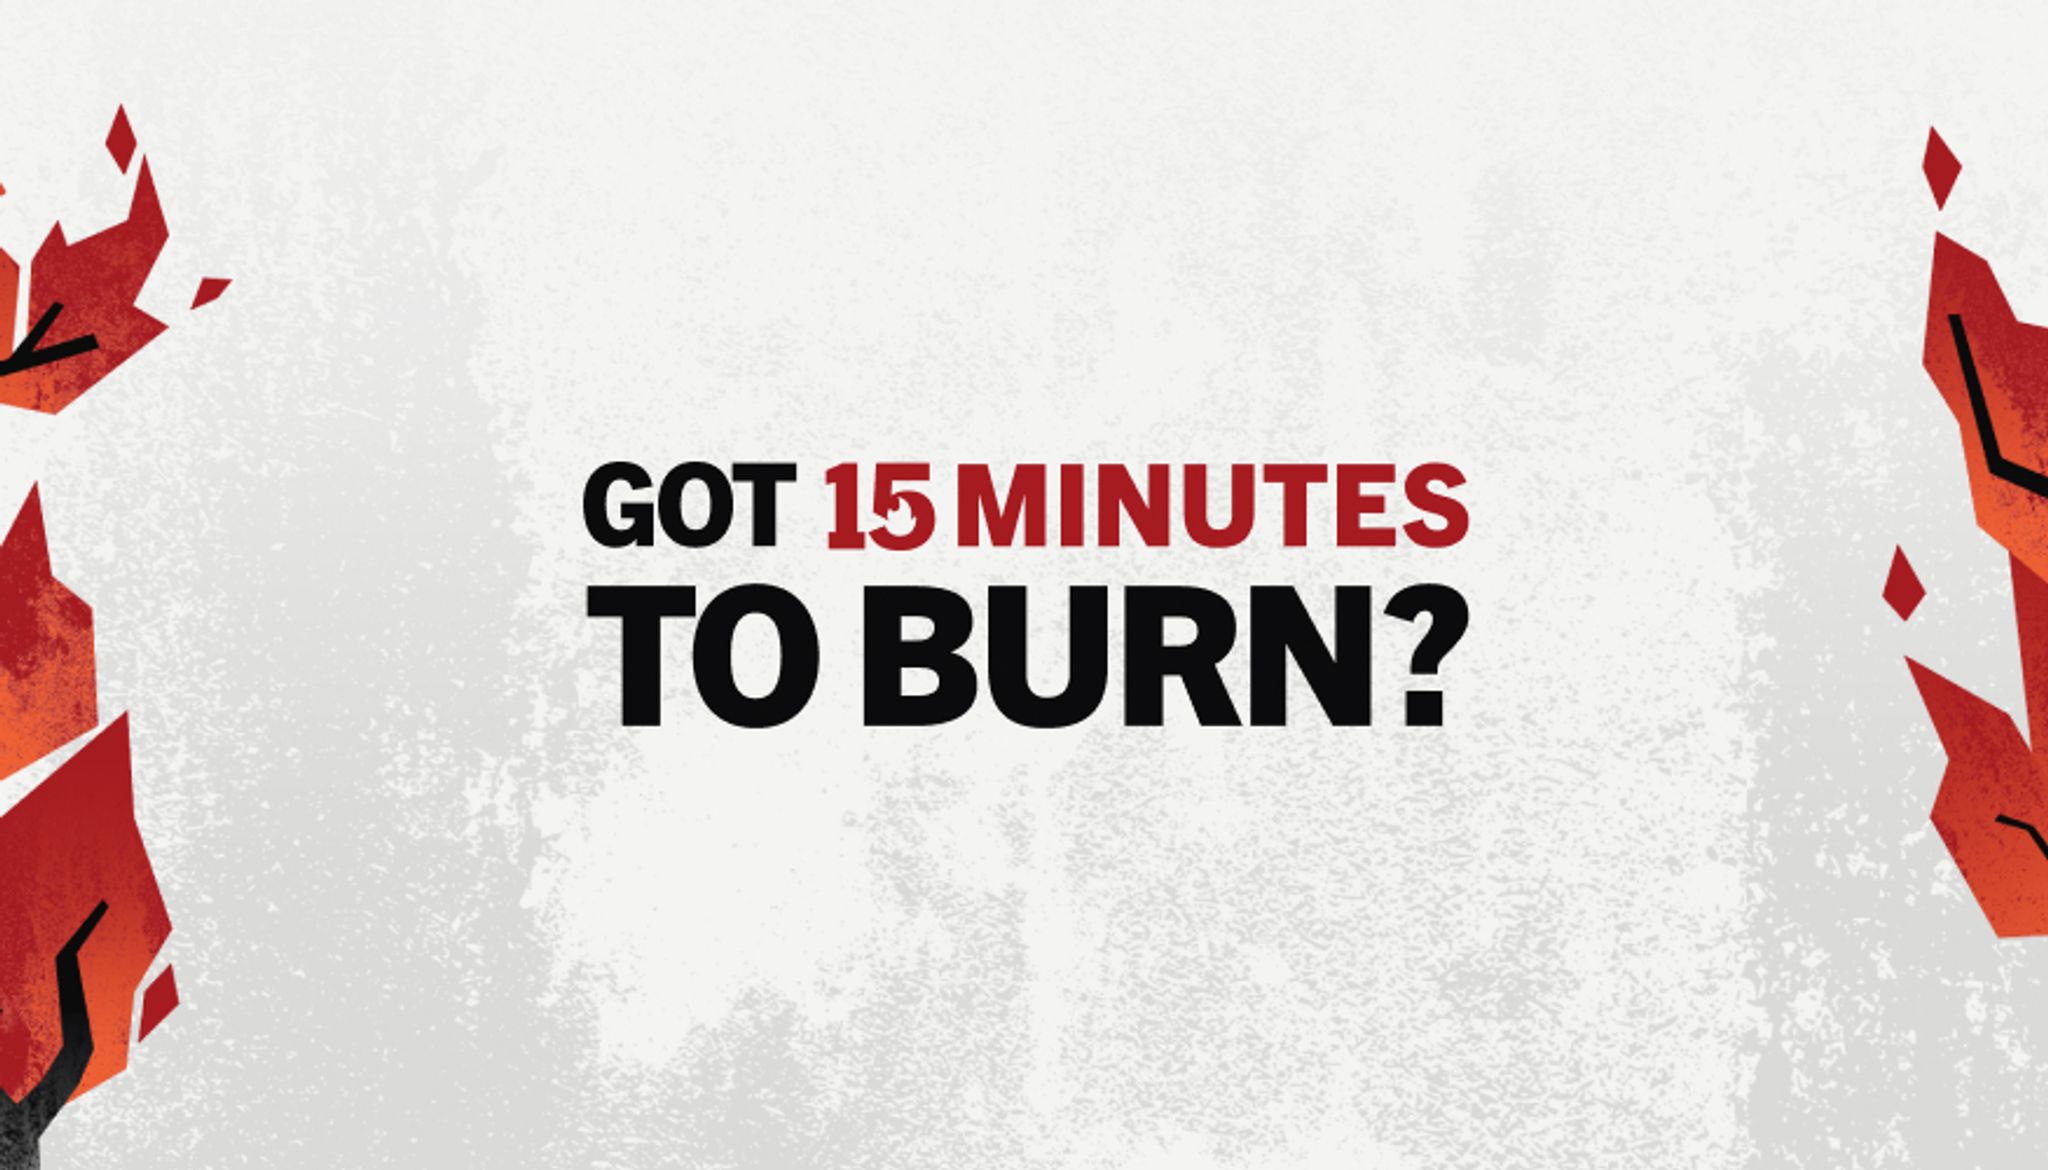 Got 15 Minutes to Burn?